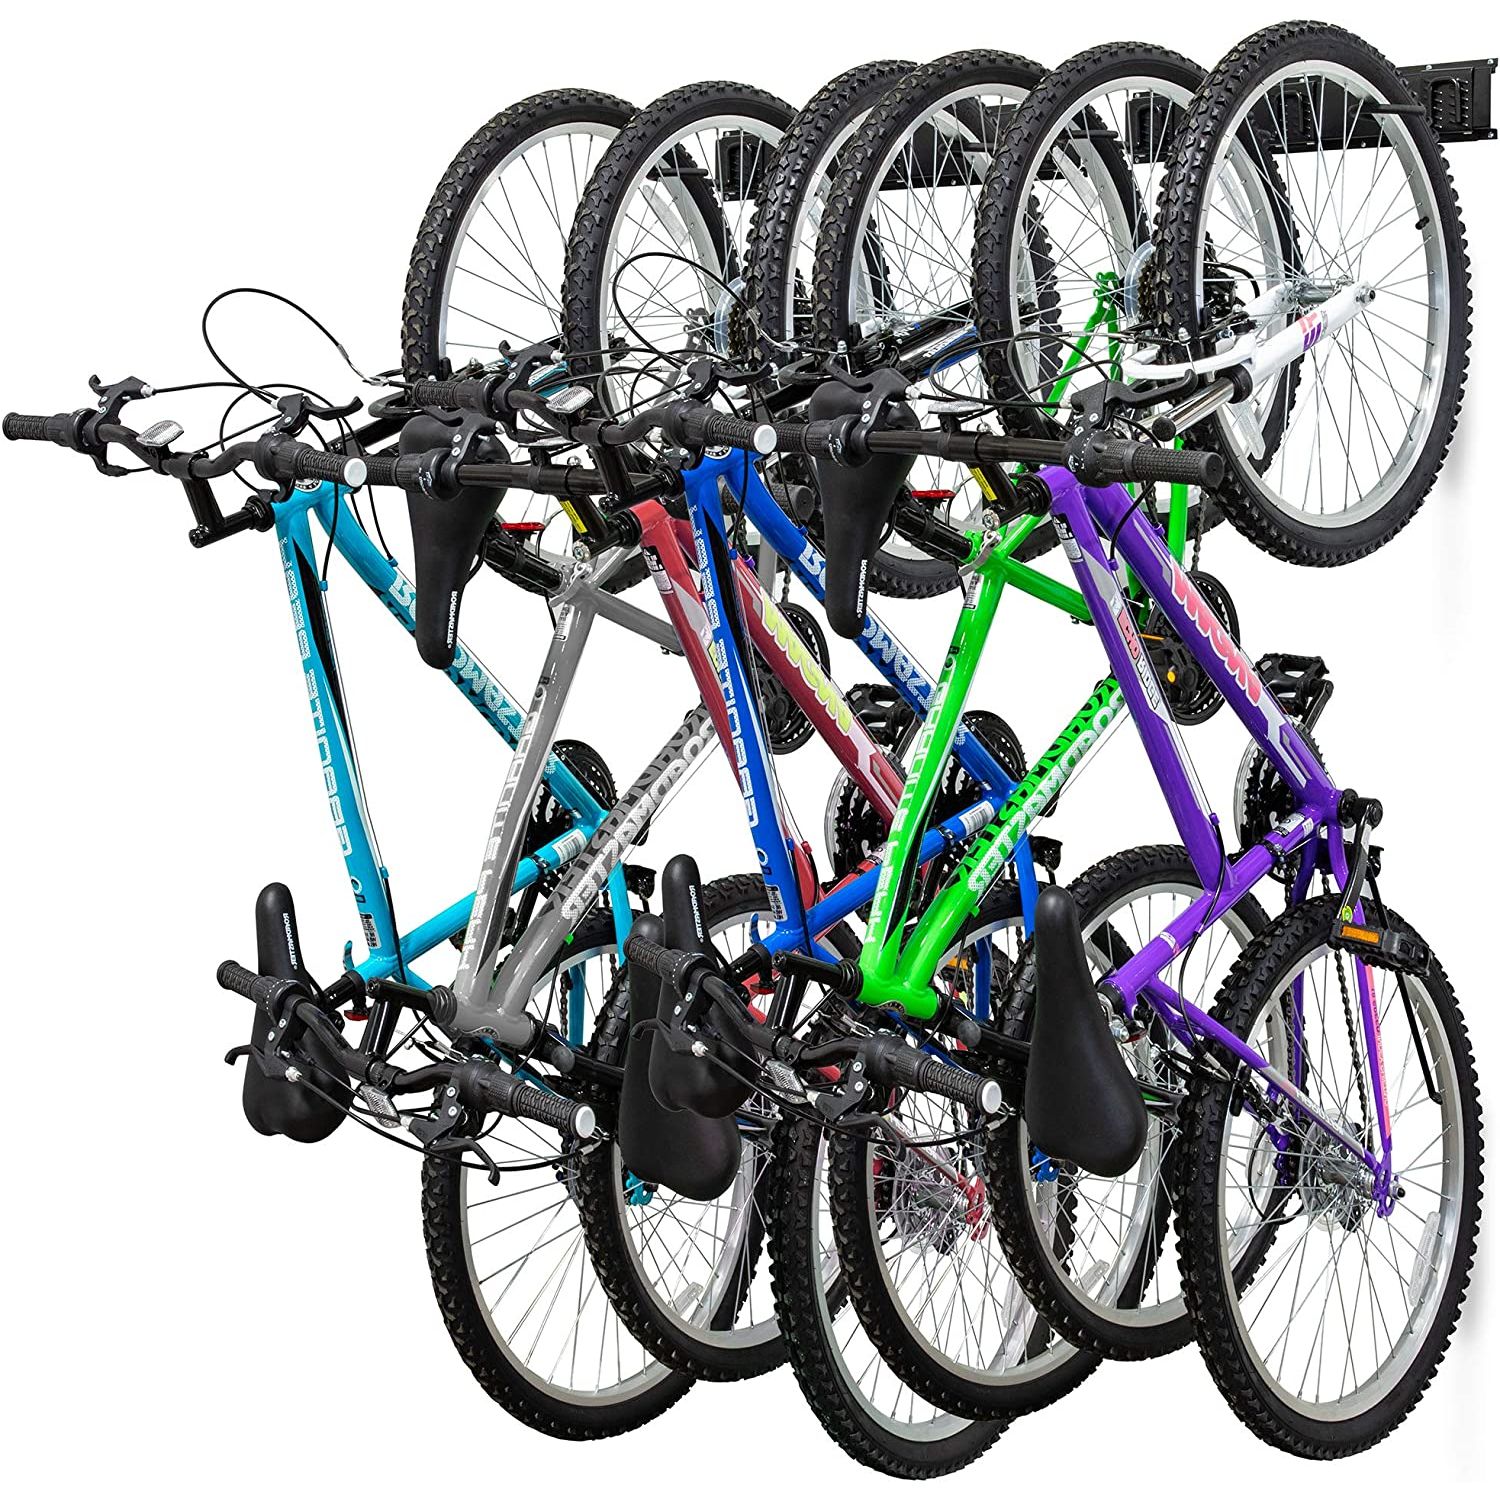 DAMEING Bike Storage Rack, Garage Wall Mount Bike Rack, Holds 6 Bicycles &  6 Helmets, Up to 500lbs, Heavy Duty Bike Hangers for Garage, Bike Hooks for